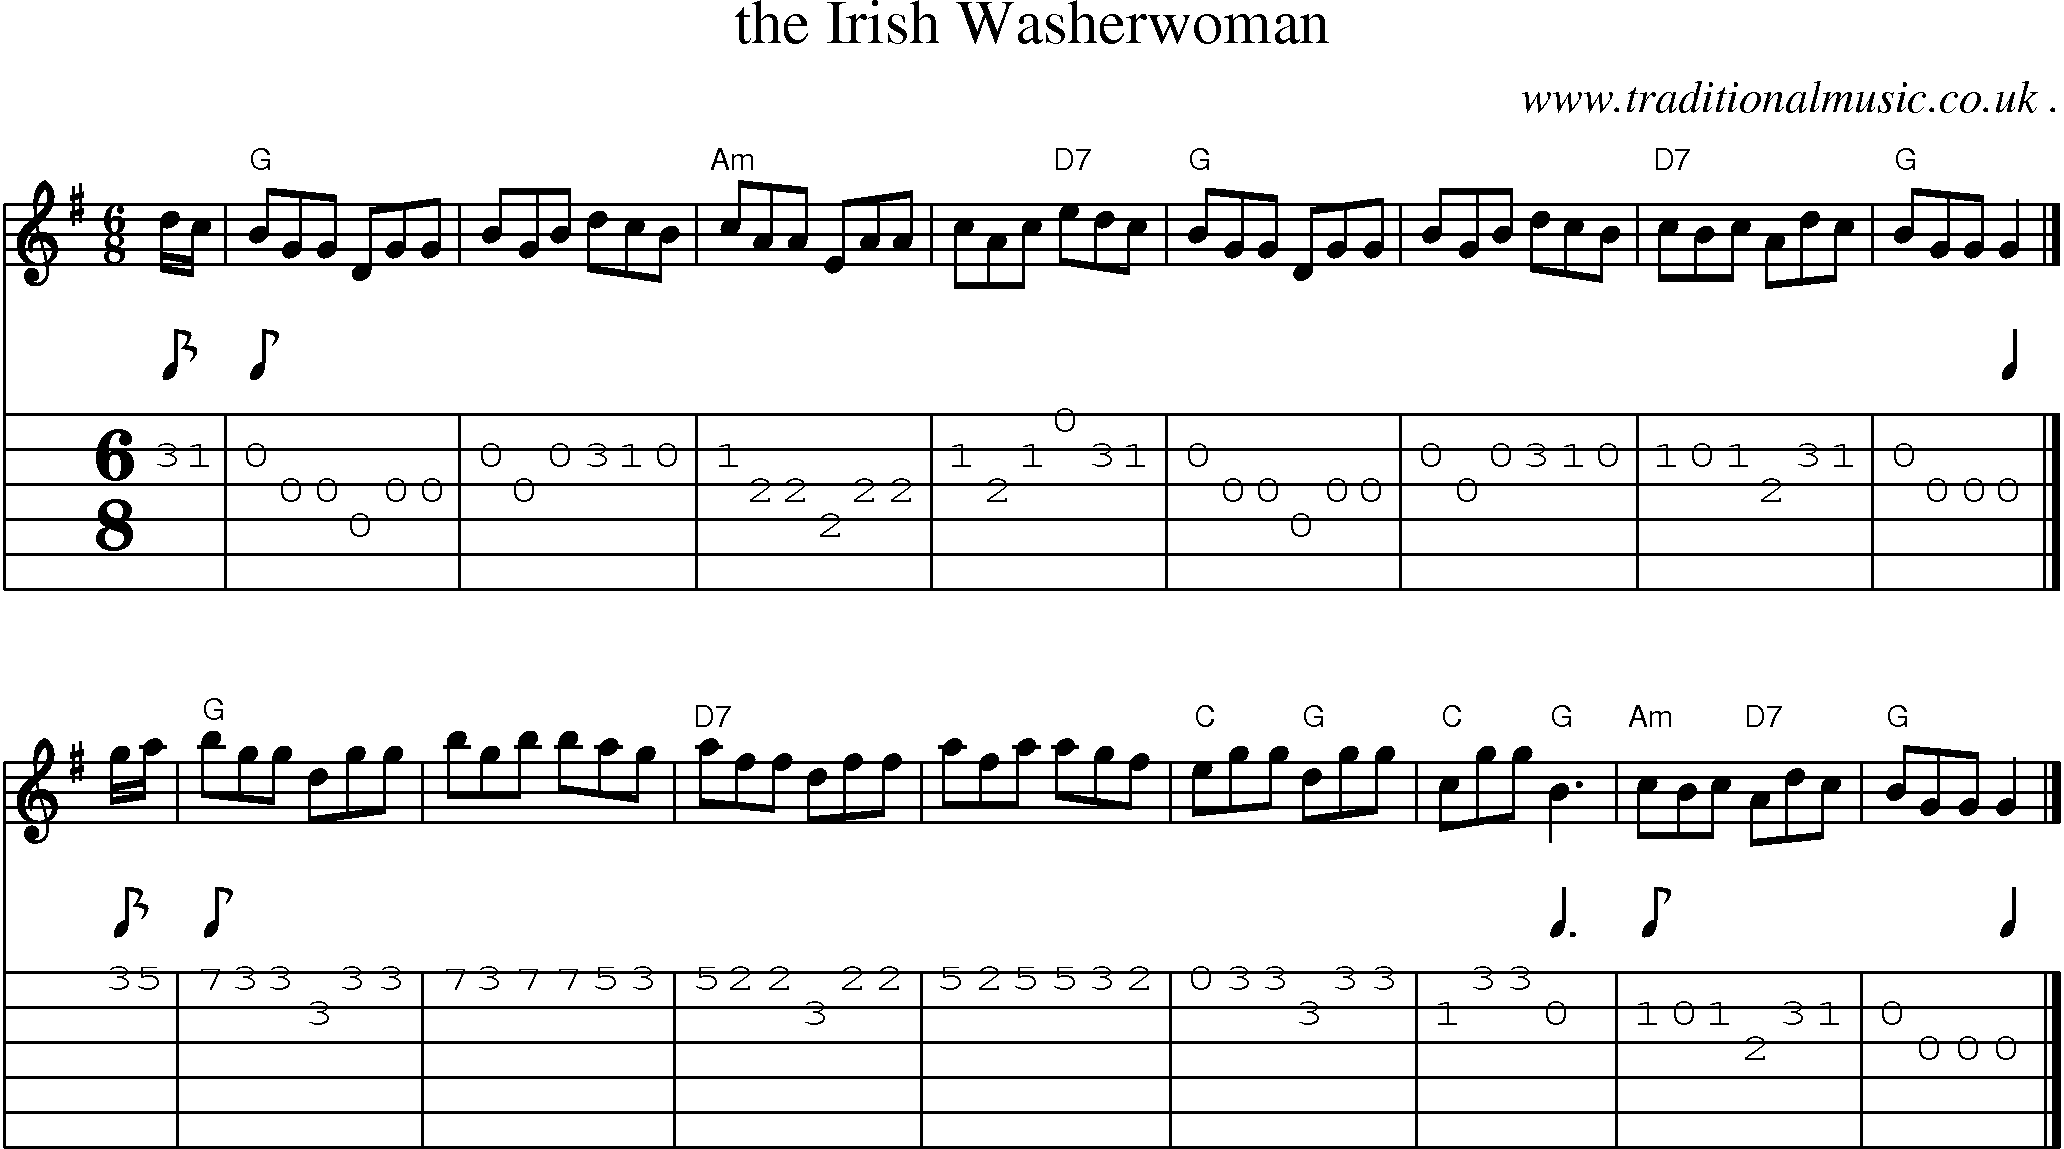 Sheet-music  score, Chords and Guitar Tabs for The Irish Washerwoman